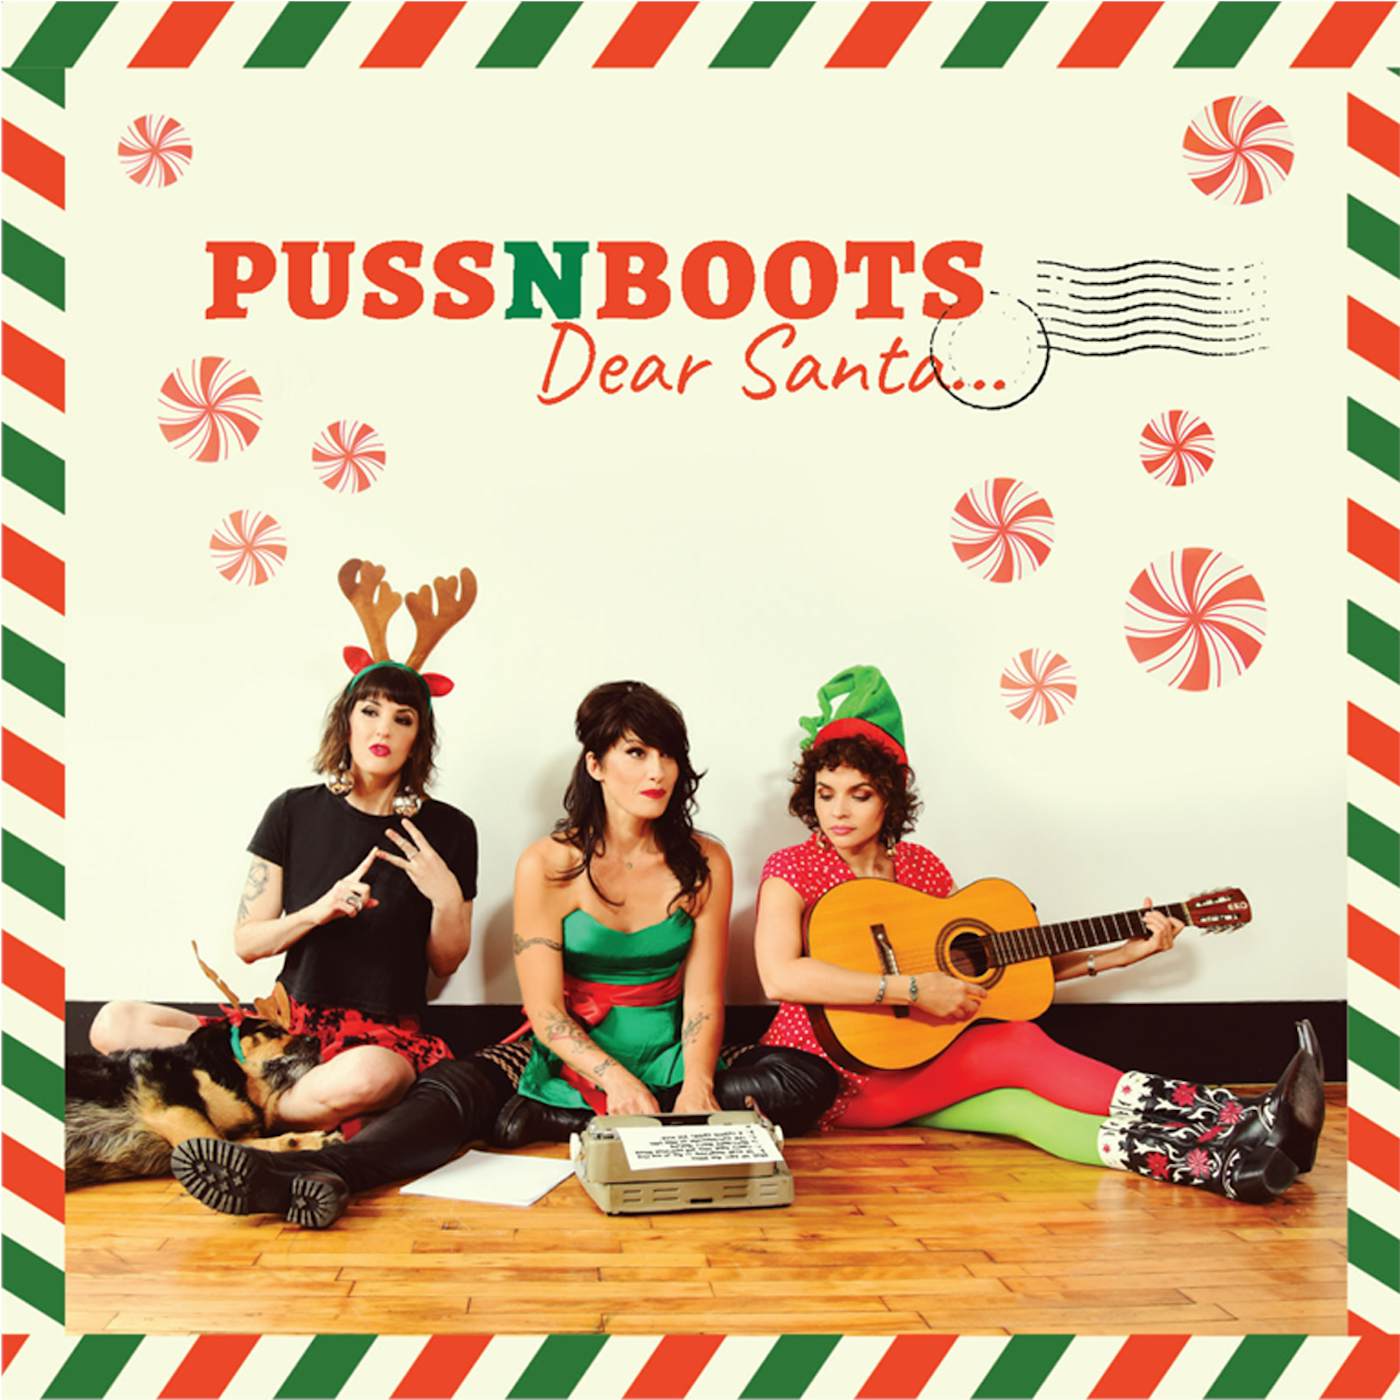 Norah Jones Puss N Boots "Dear Santa..." Vinyl